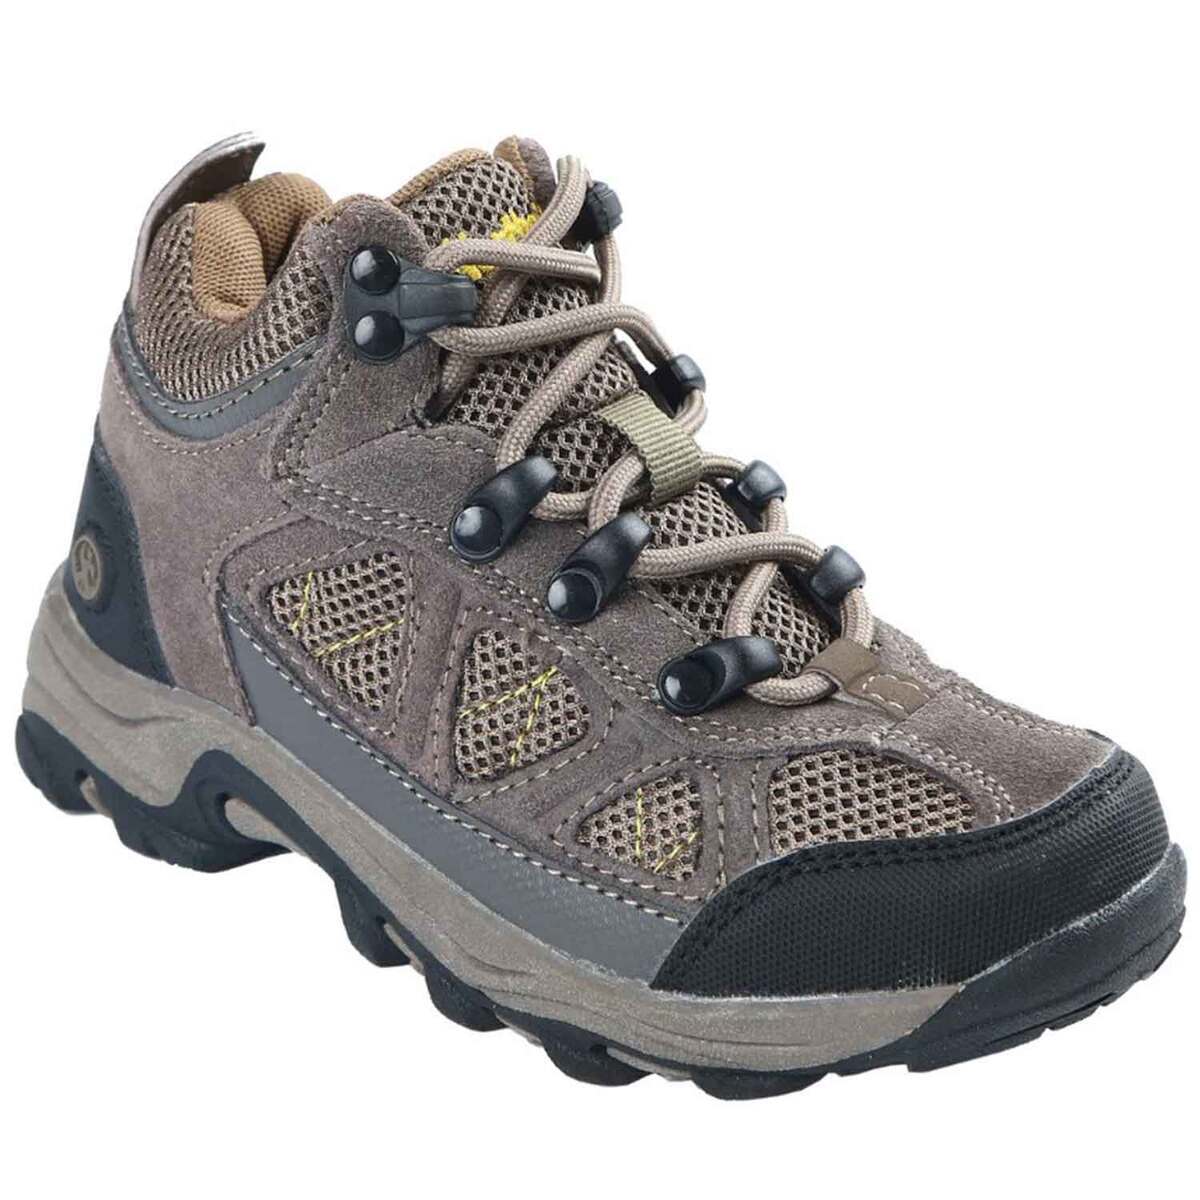 Northside Boys' Caldera Jr Mid Hiking Boots | Sportsman's Warehouse